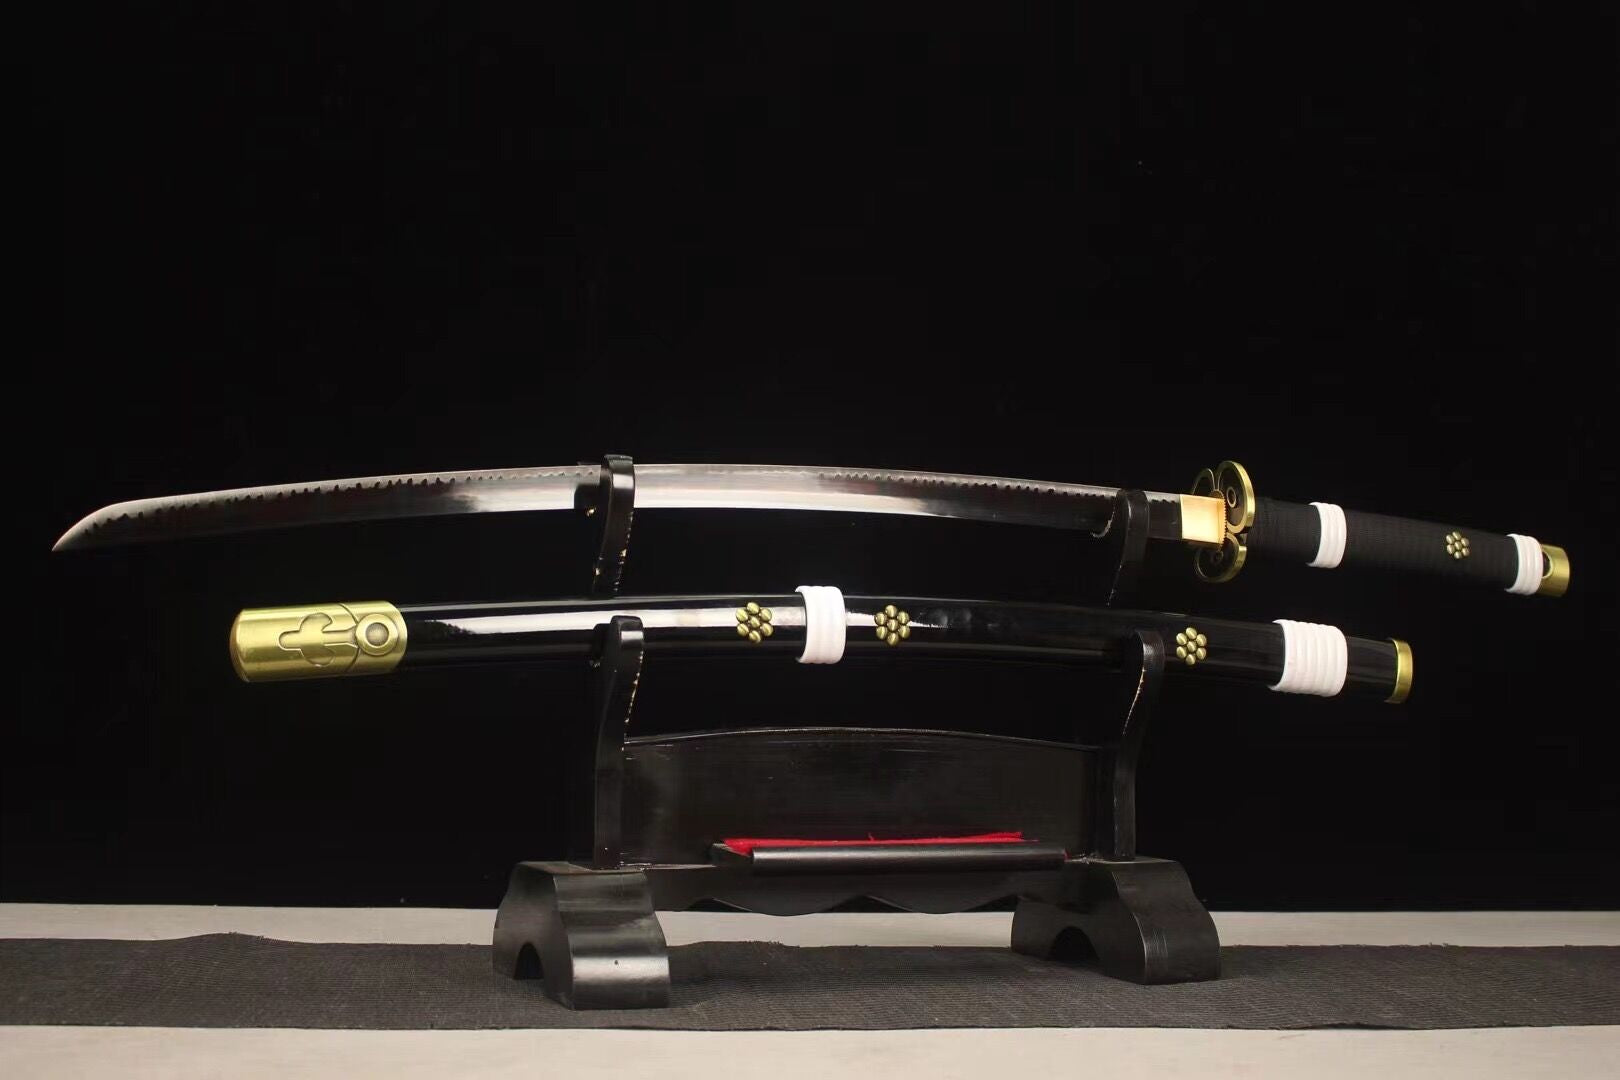 Black Yamato,Zoro’s katana,Anime sword,One piece,Japanese Samurai sword,High-carbon steel